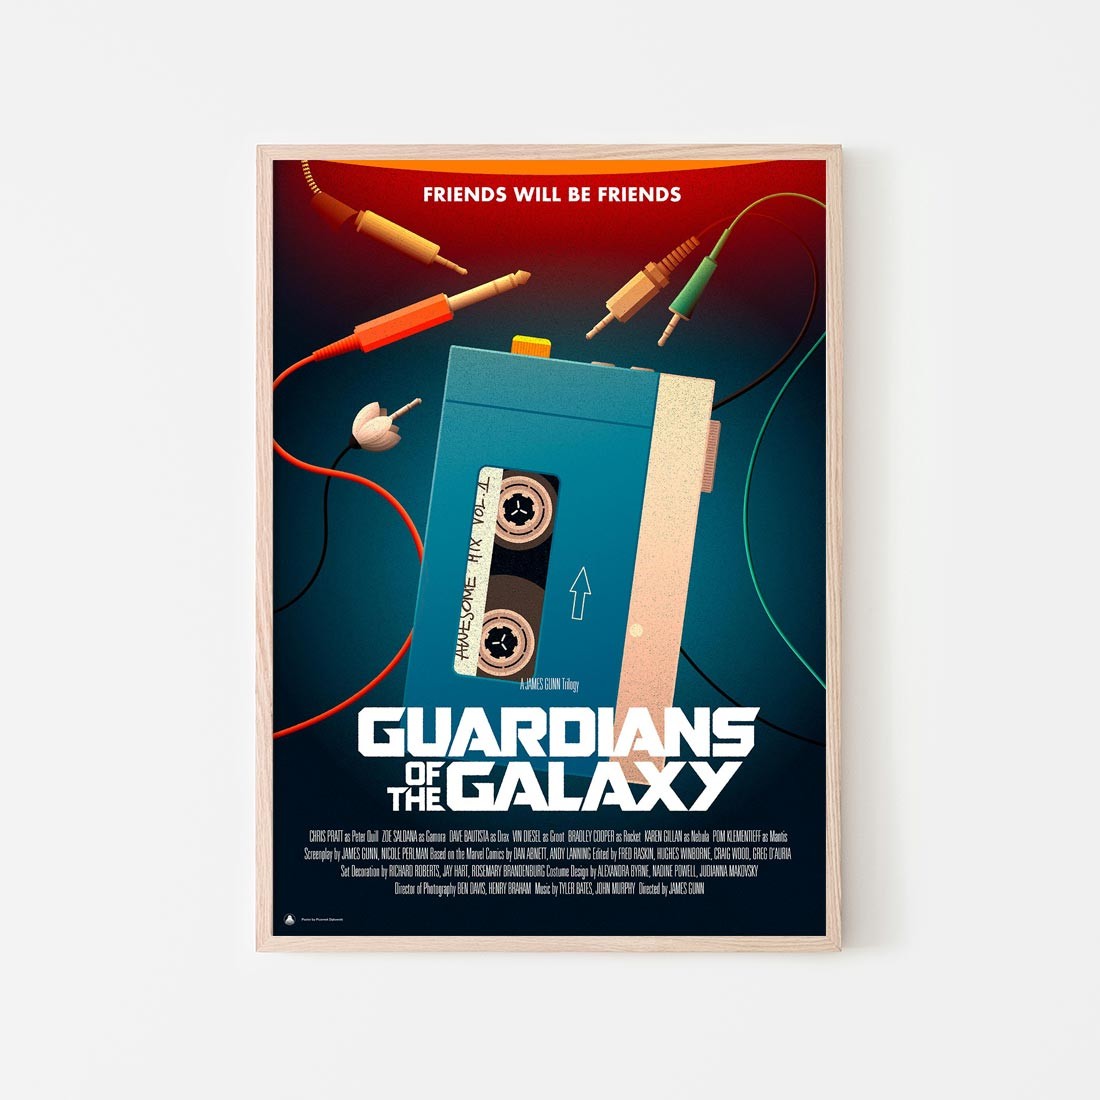 Plakat Strażnicy Galaktyki